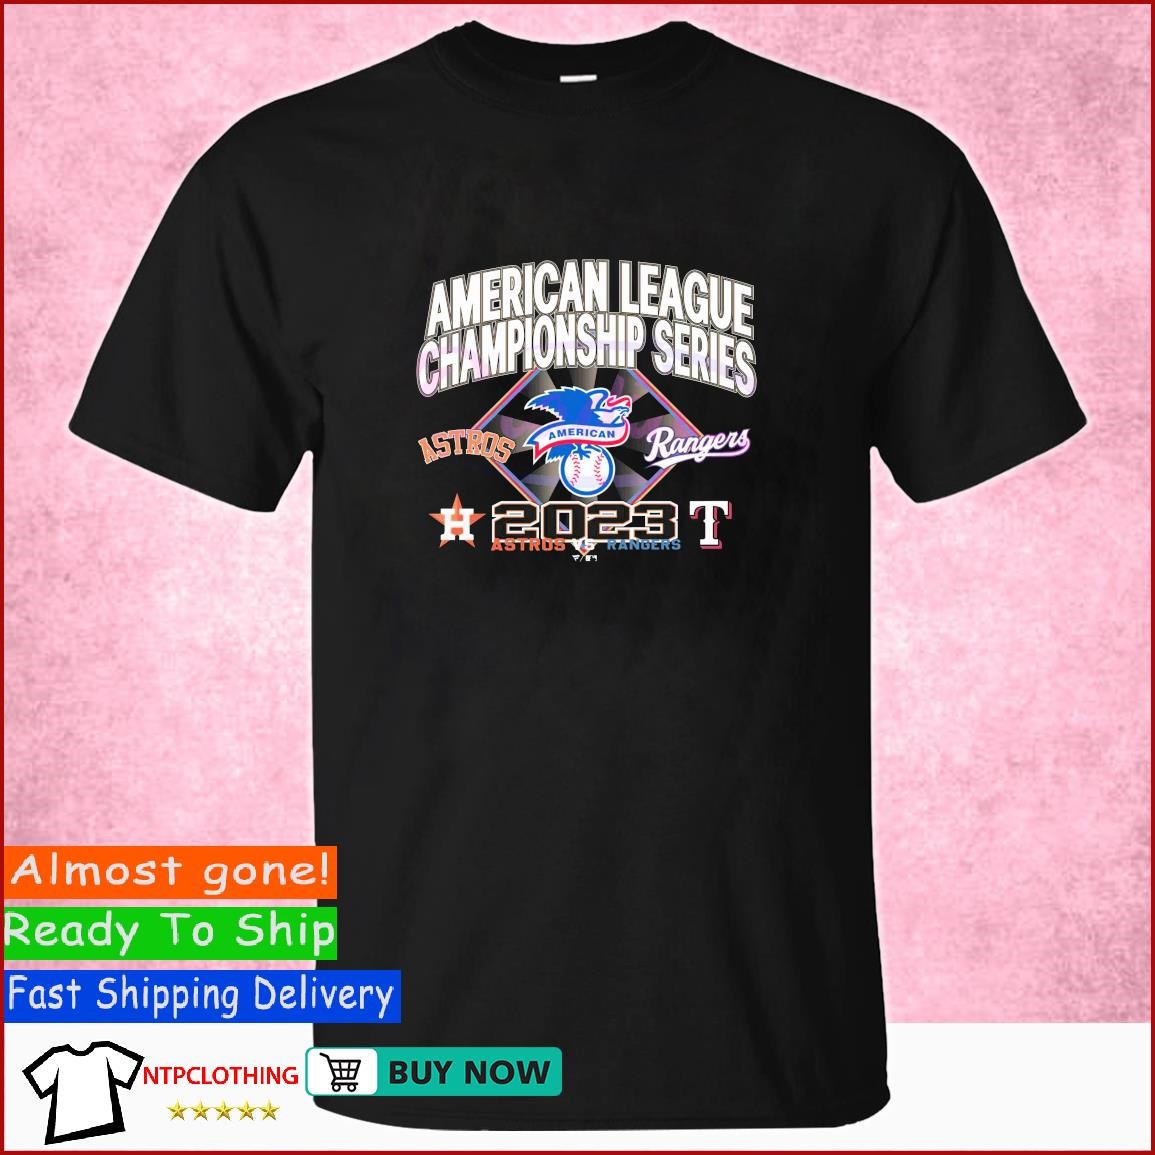 Astros Vs Rangers Alcs 2023 American League Championship Series Shirt